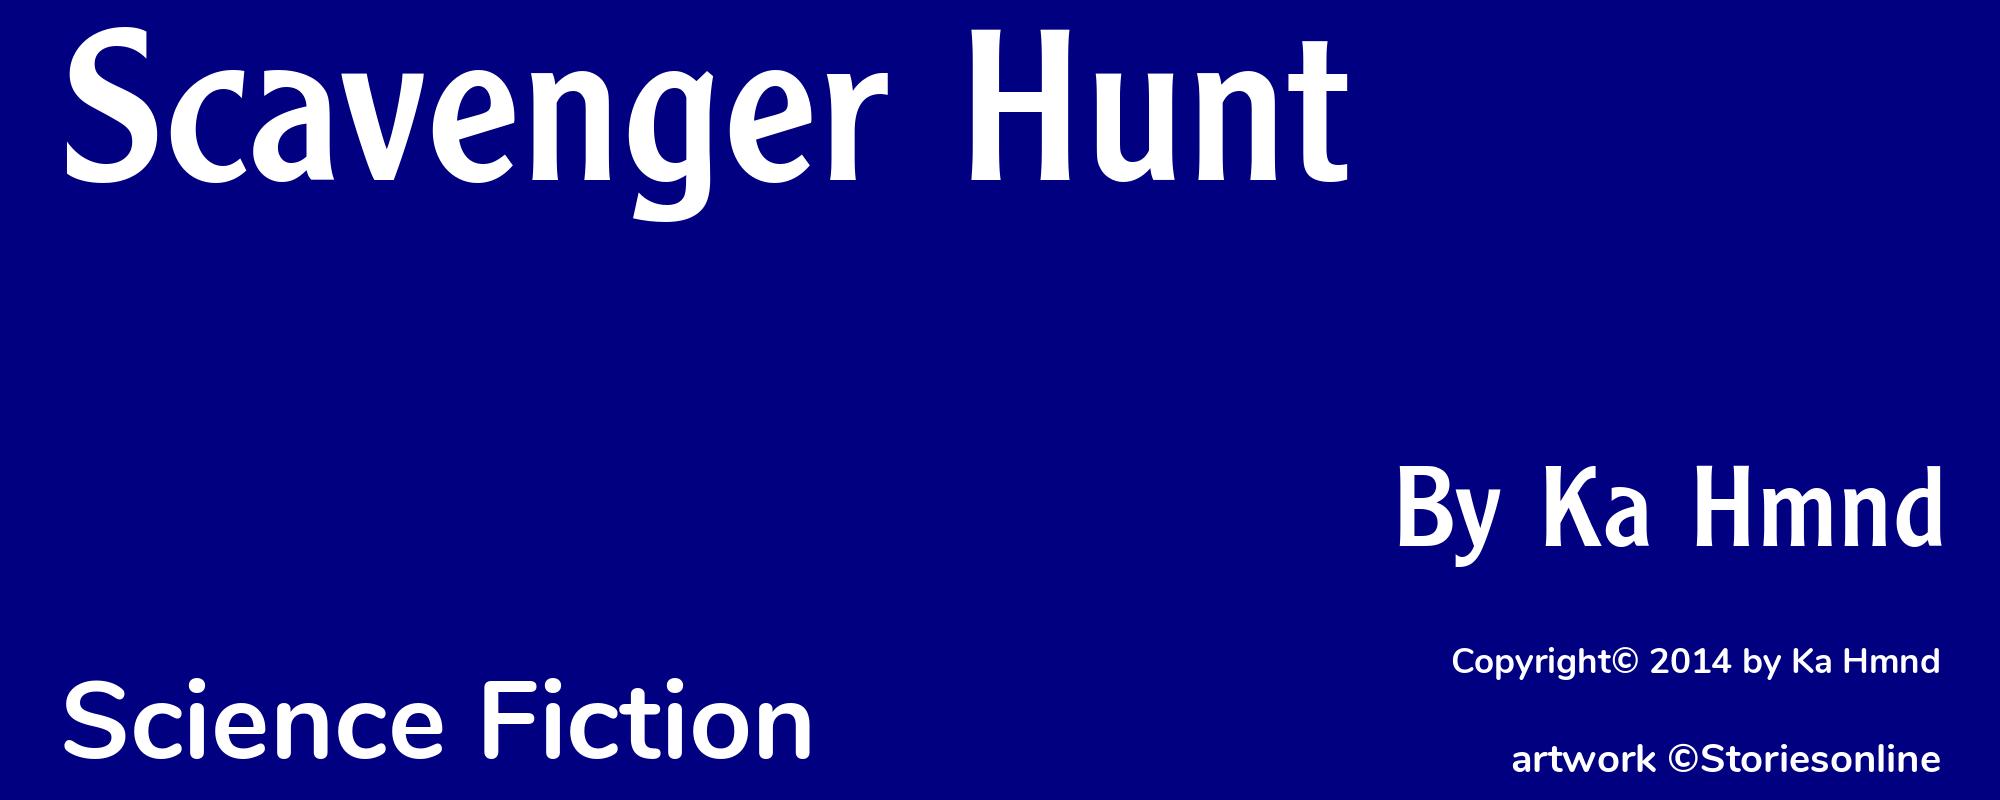 Scavenger Hunt - Cover